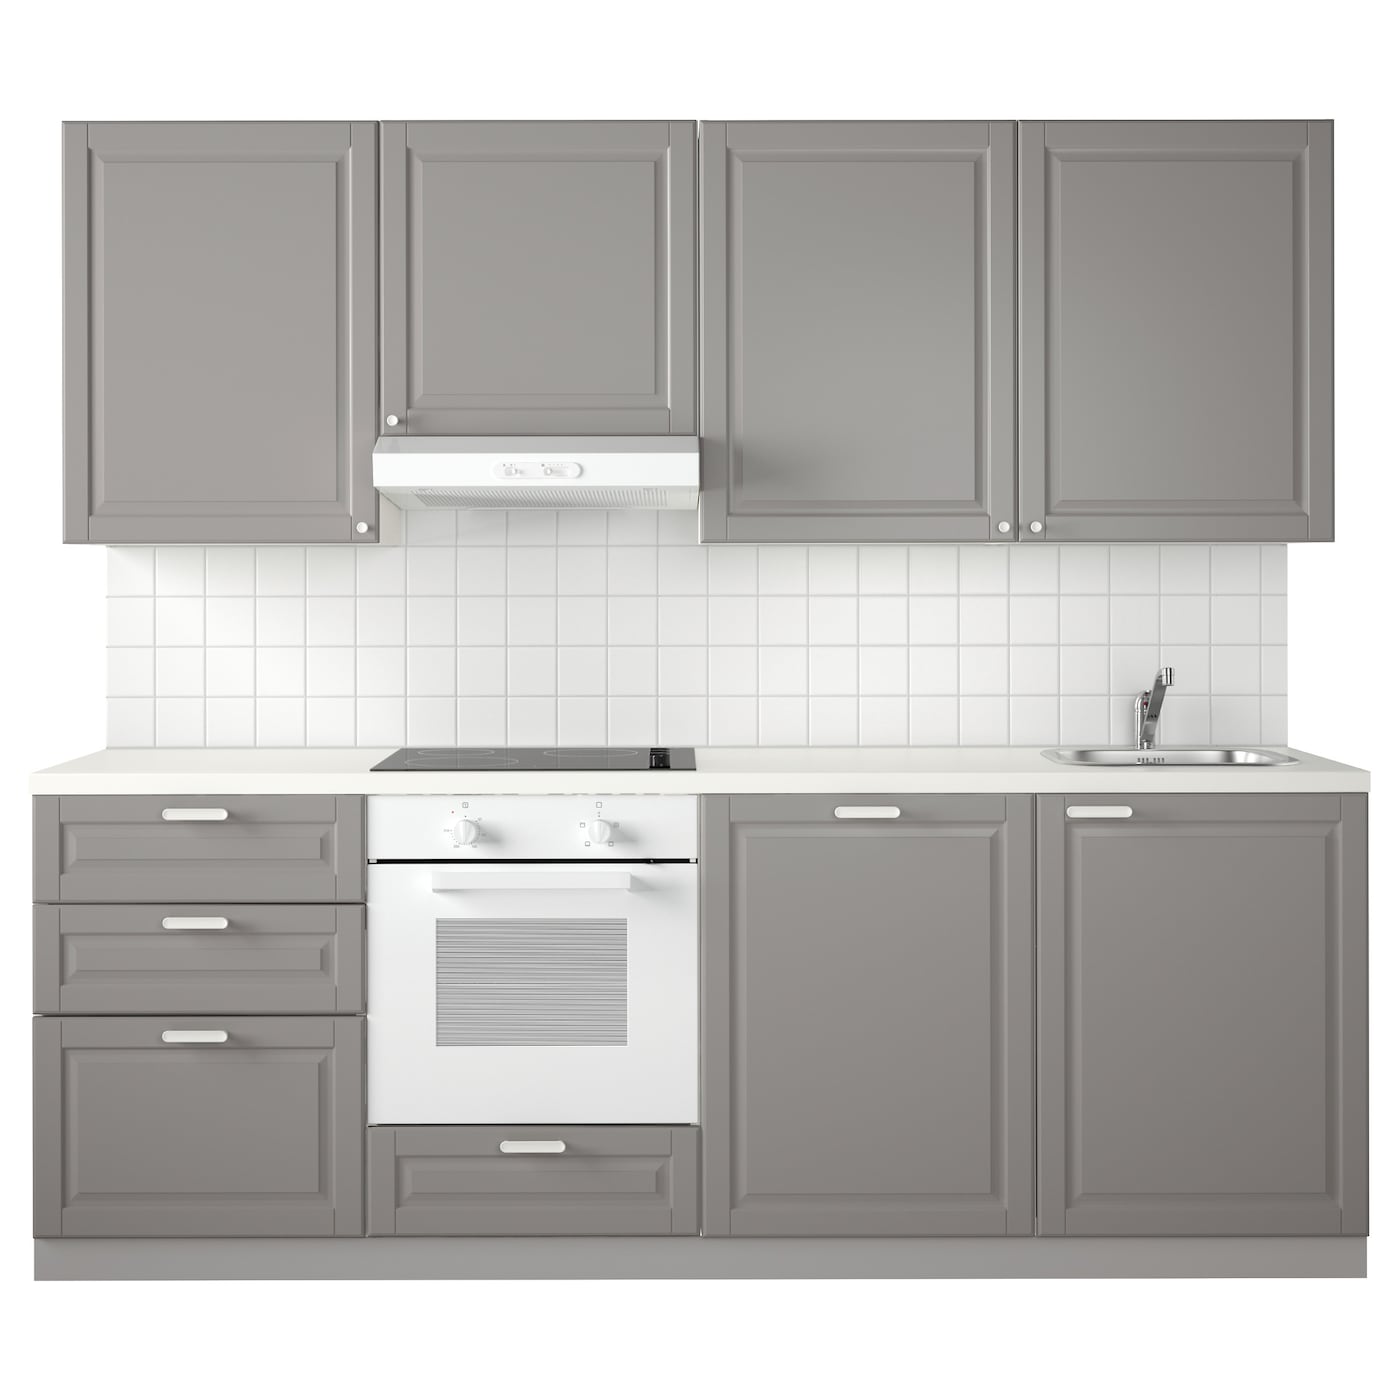 Модульный шкаф - METOD IKEA/ МЕТОД ИКЕА, 228х240 см, серый/белый